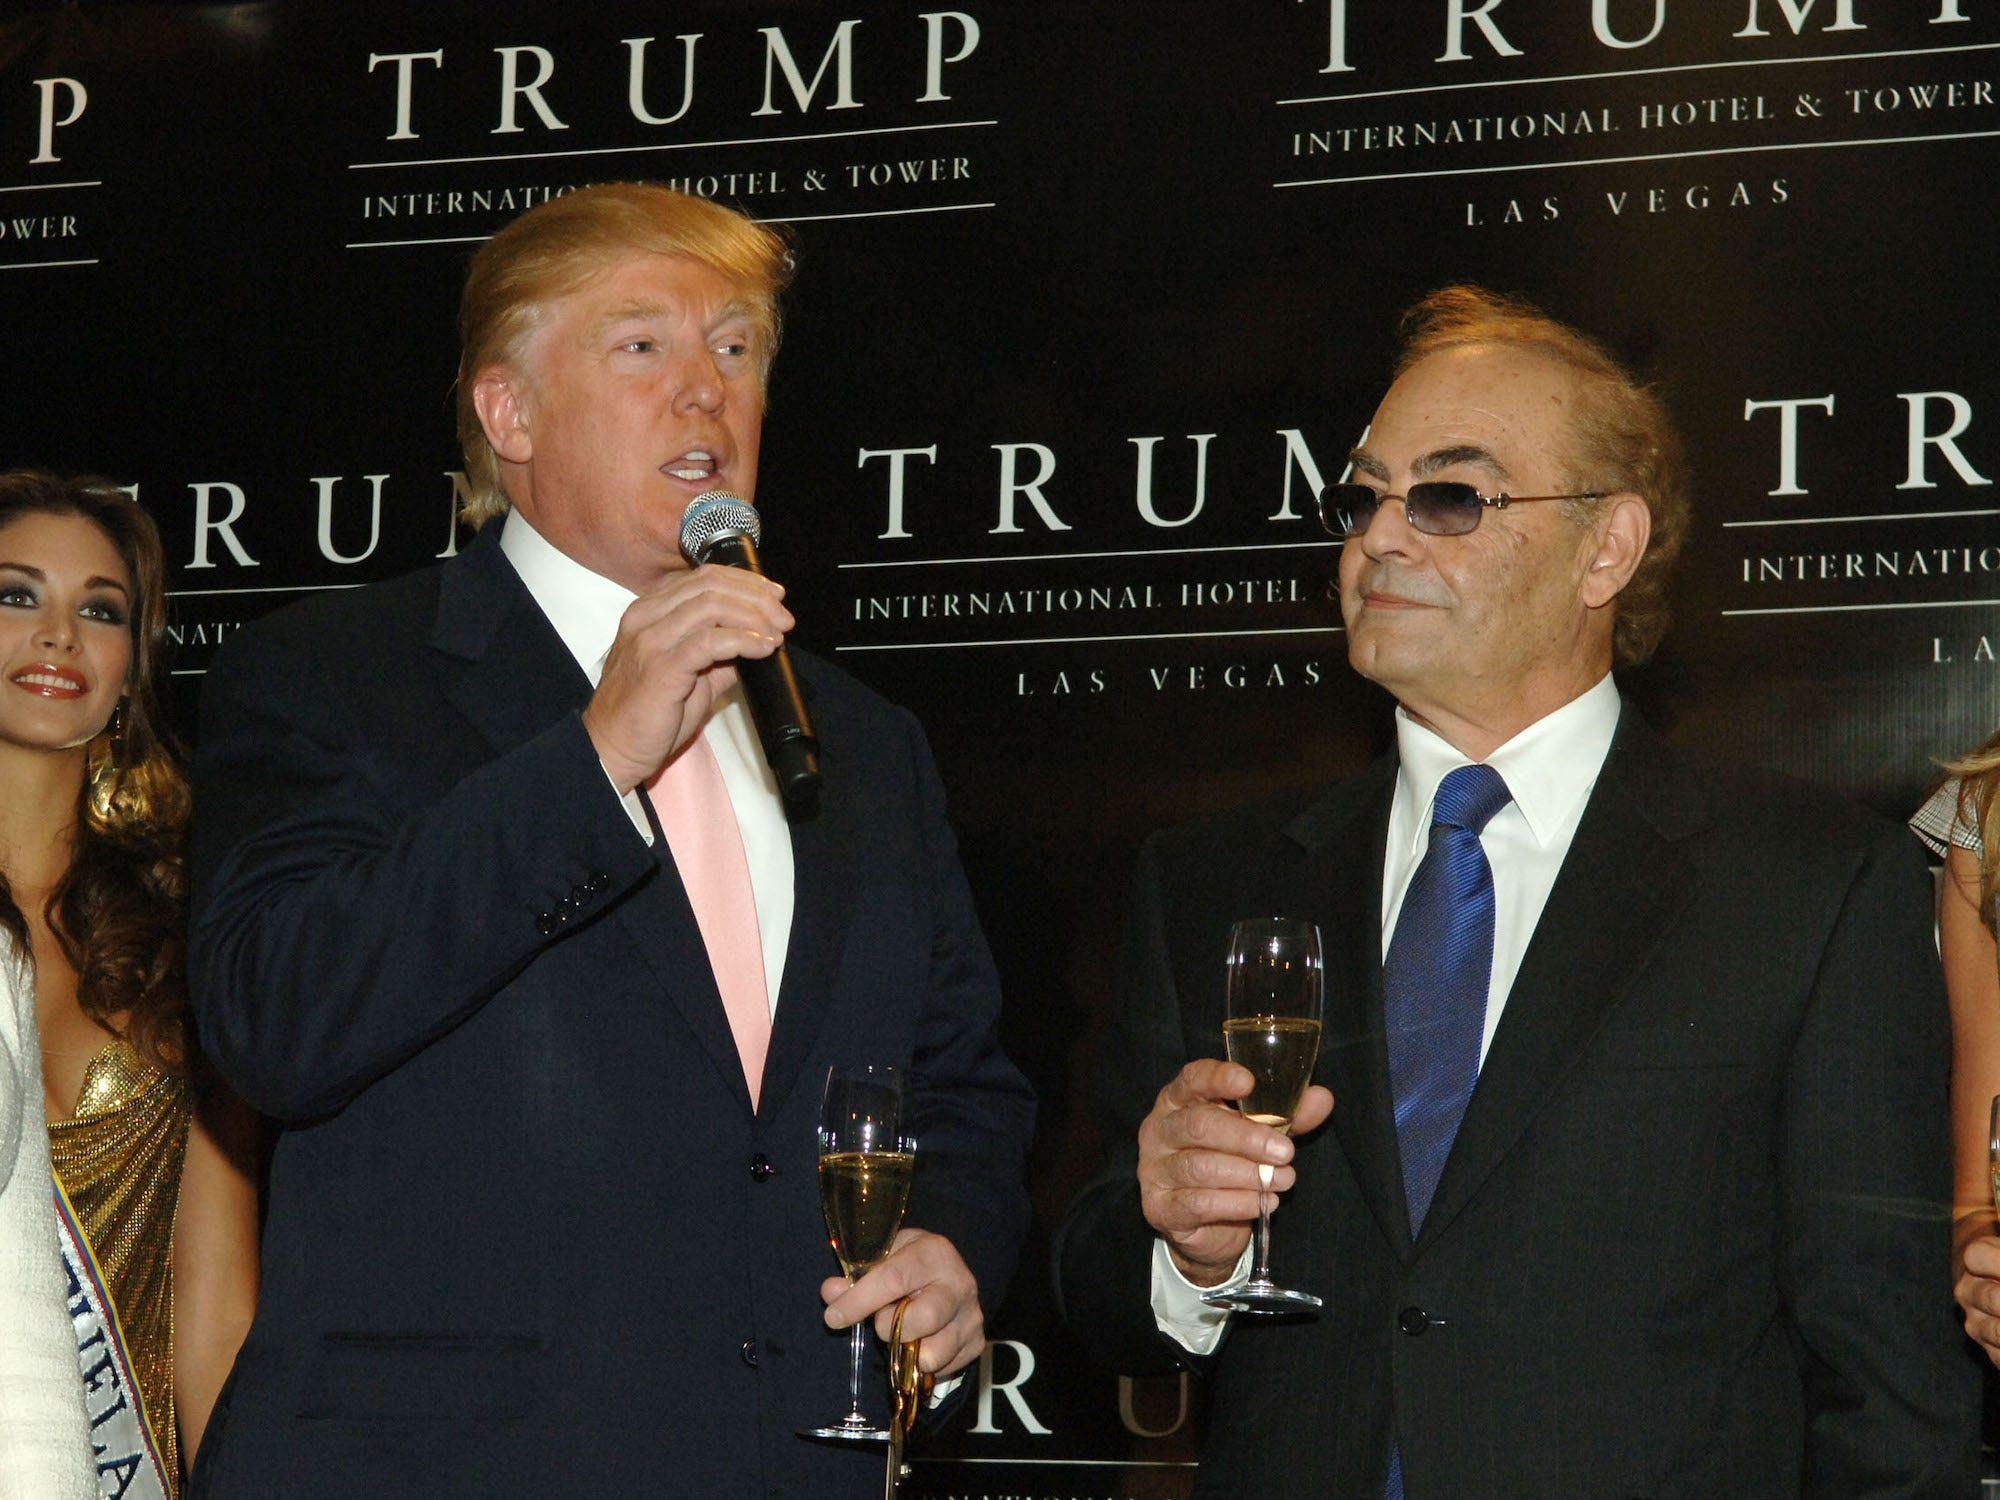 Ruffin with Trump in Las Vegas in 2008.